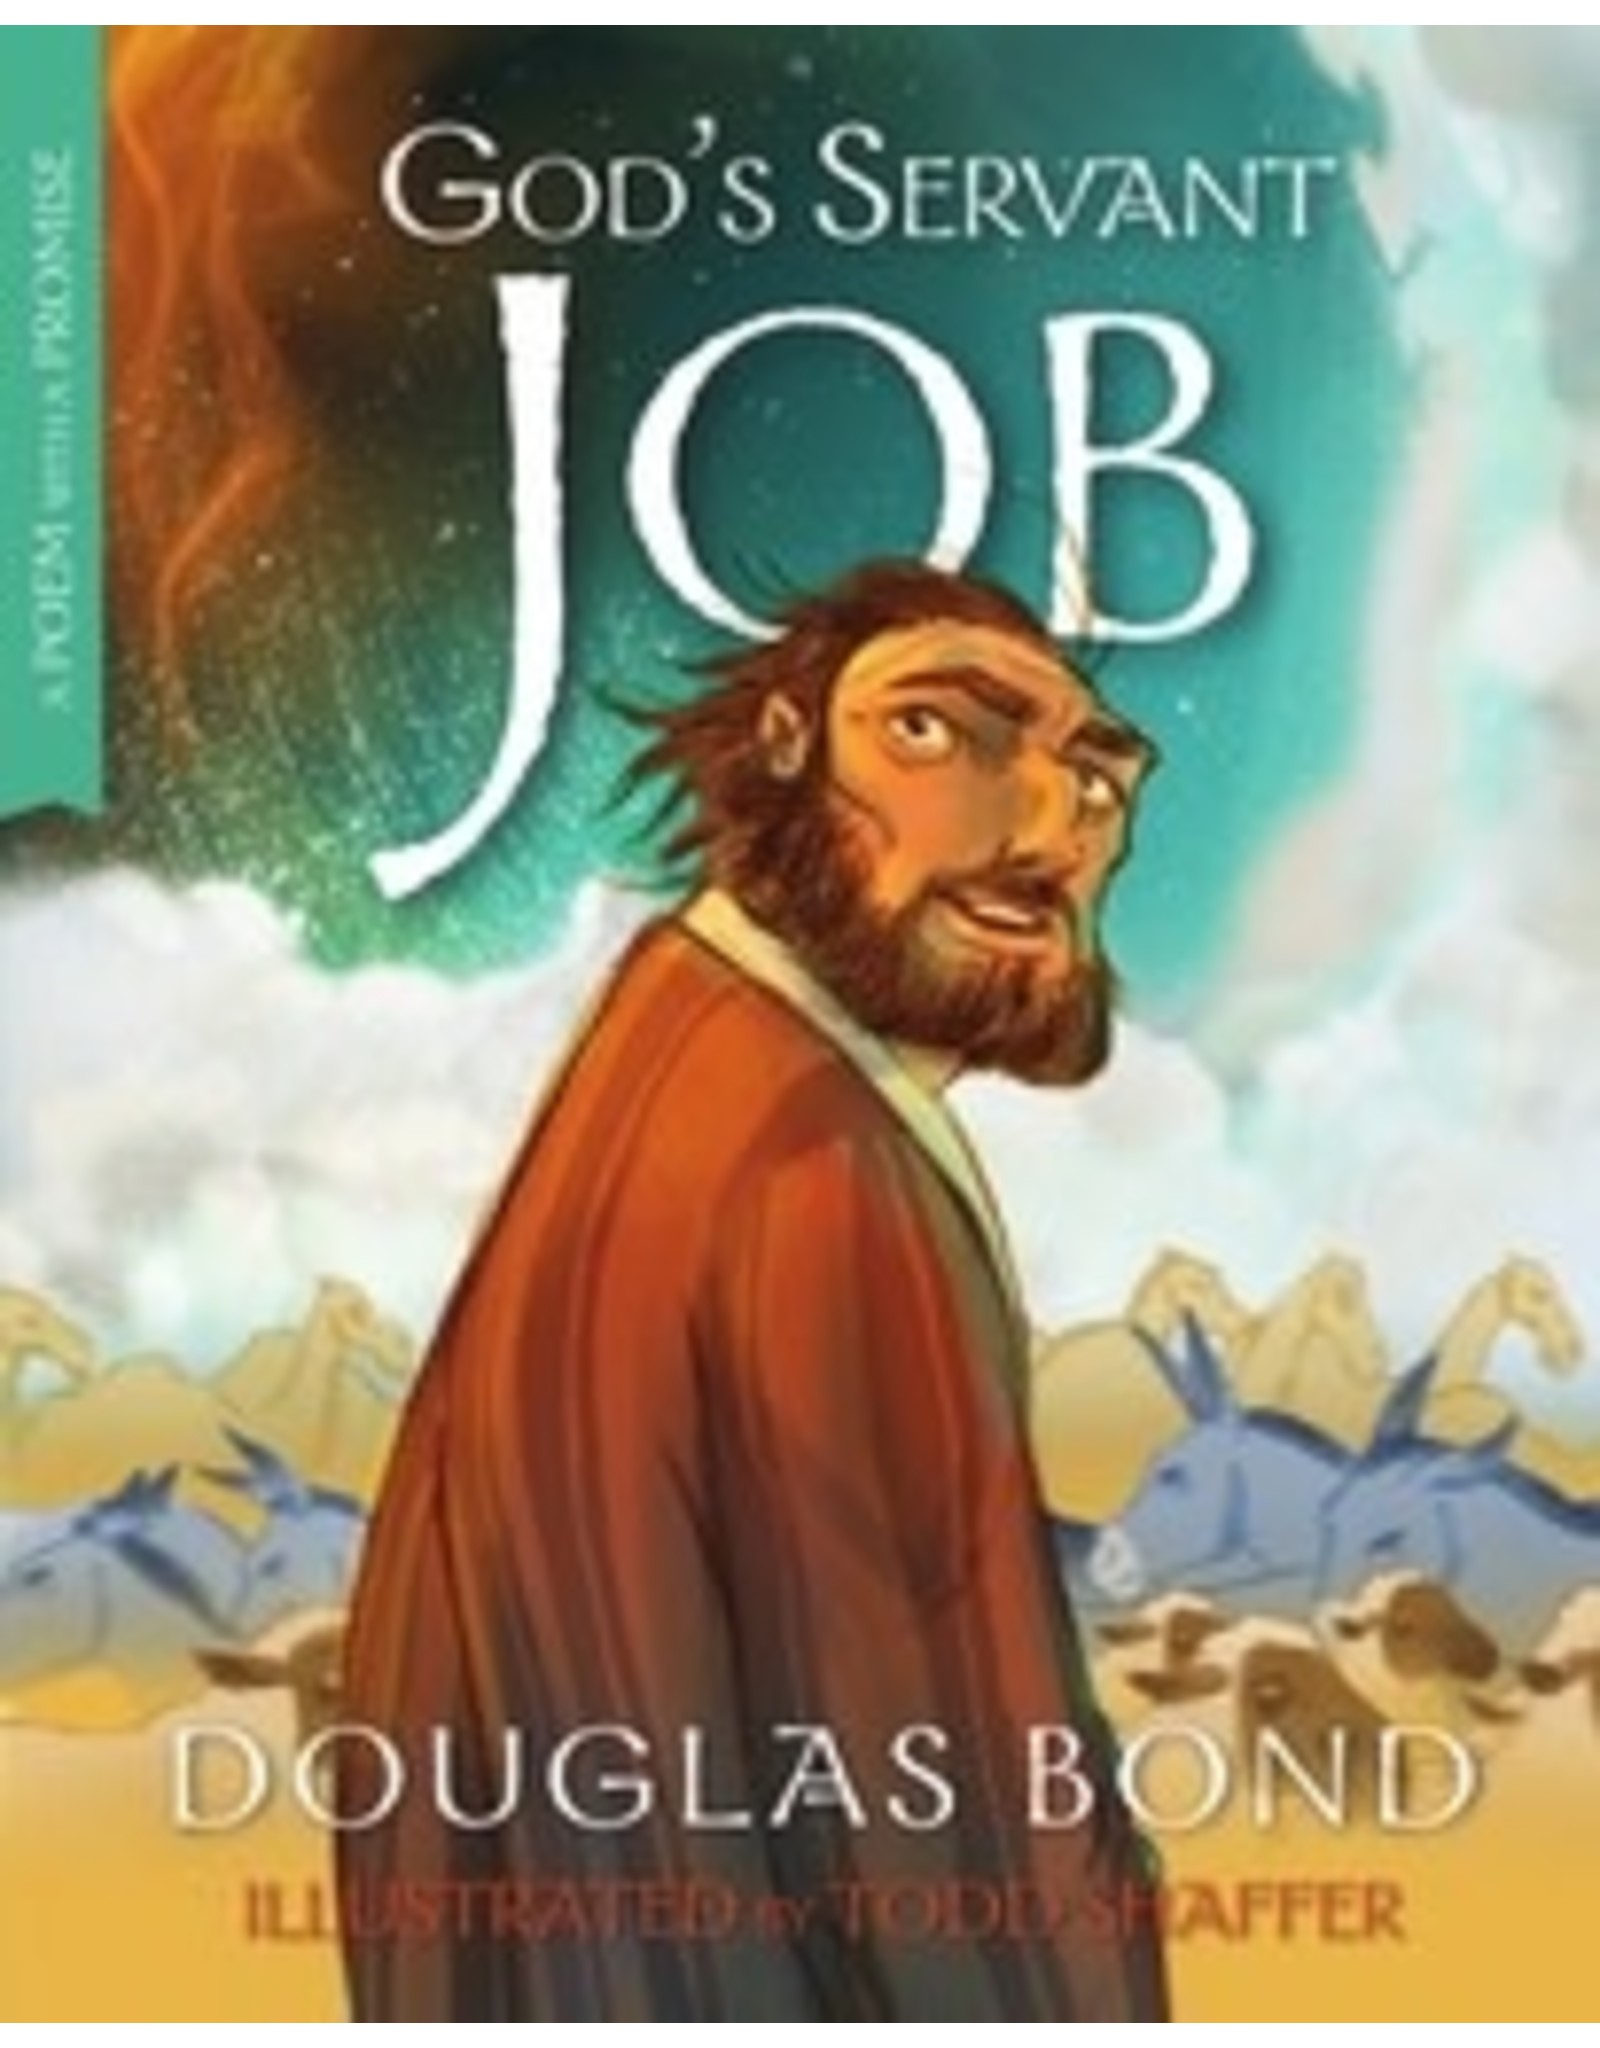 Douglas Bond God's Servant Job